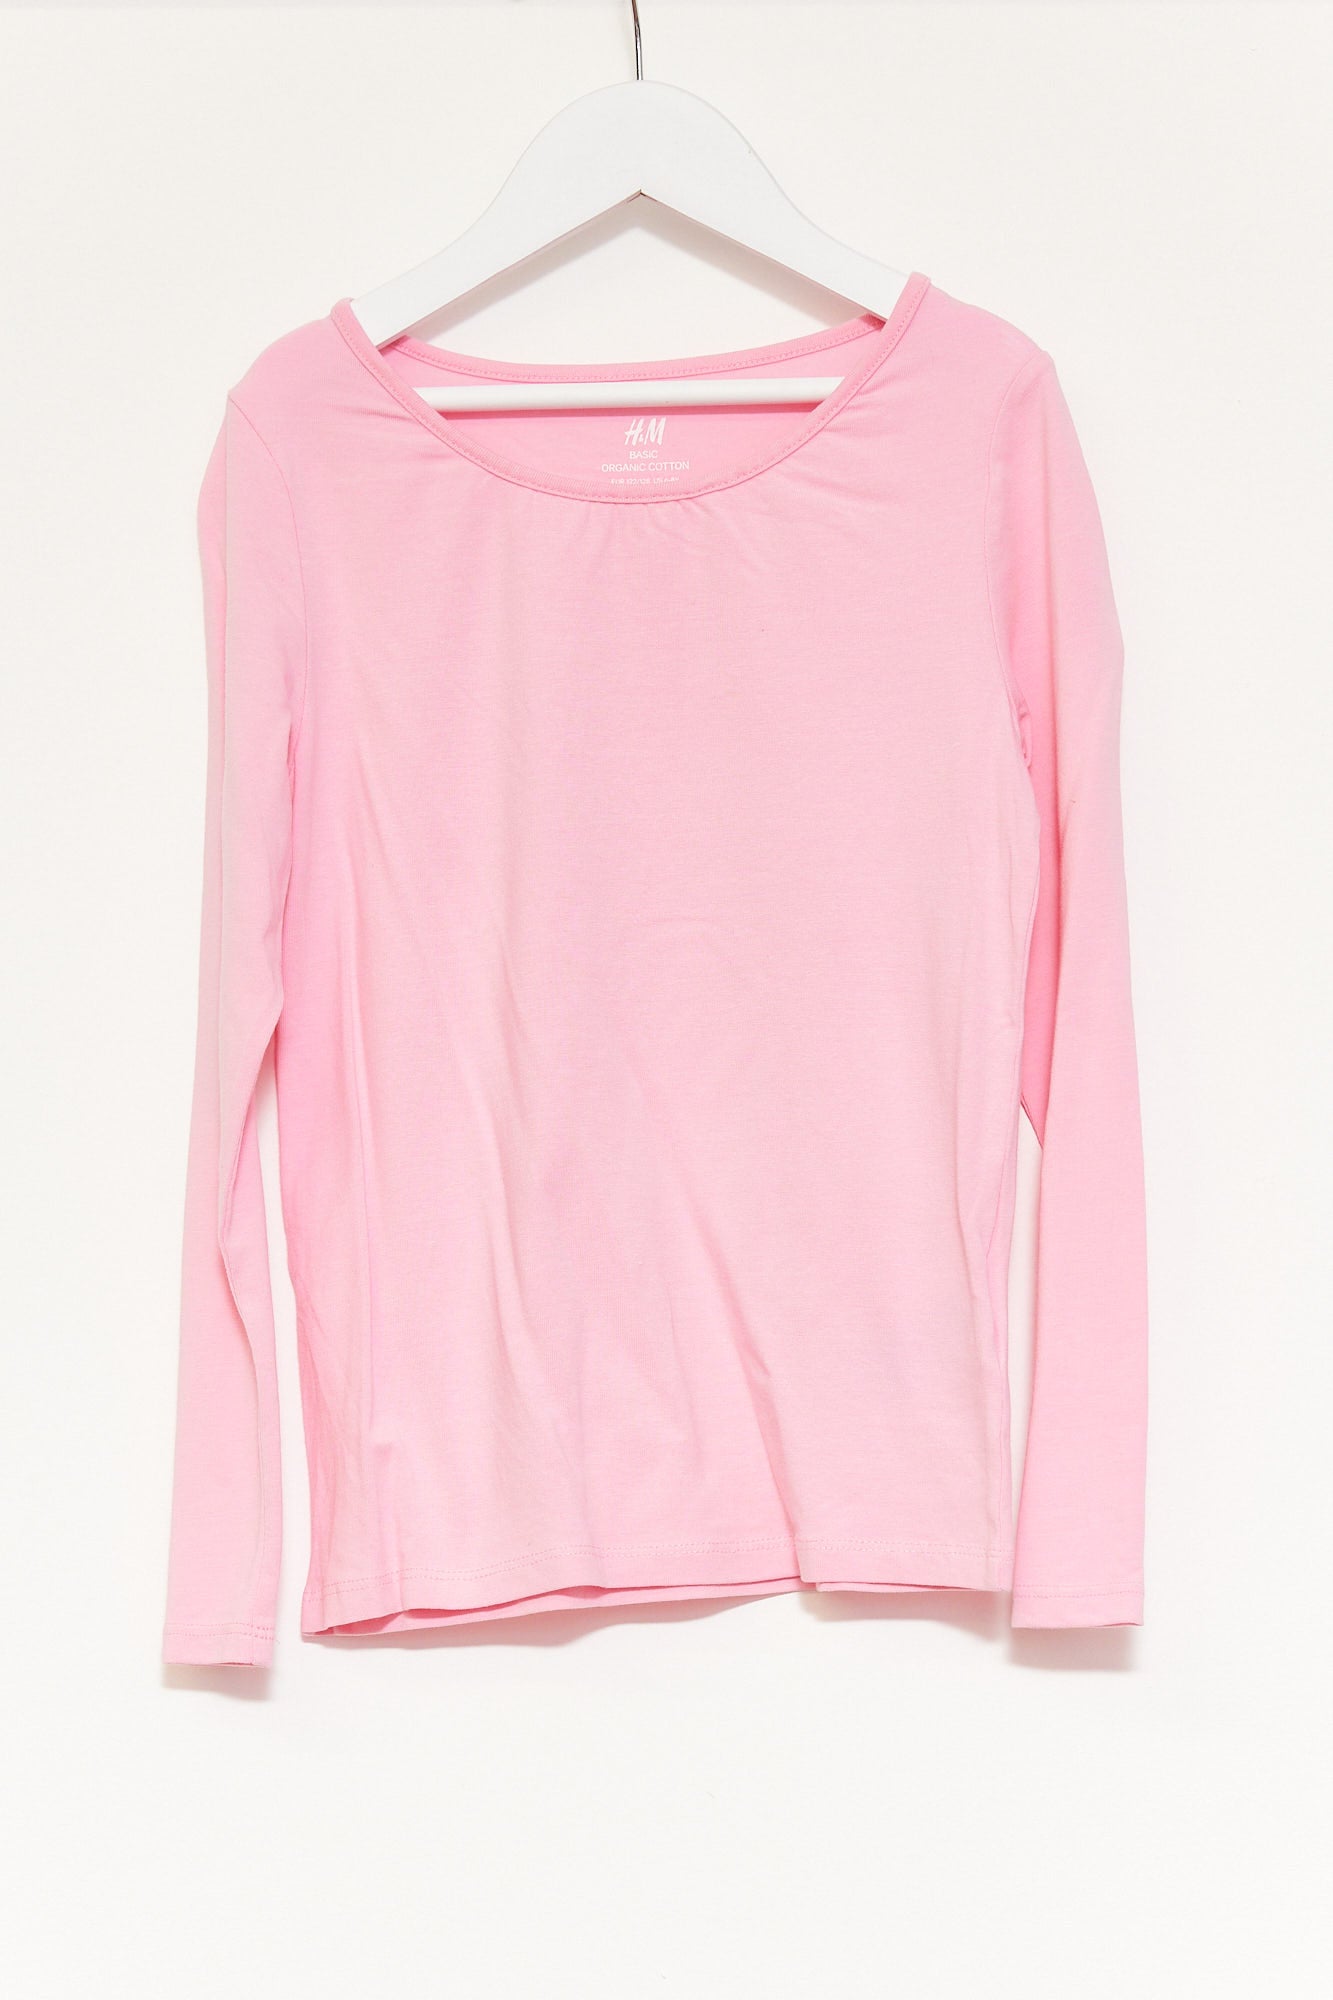 Kids H&M Pink Long Sleeve T-shirt age 6-8